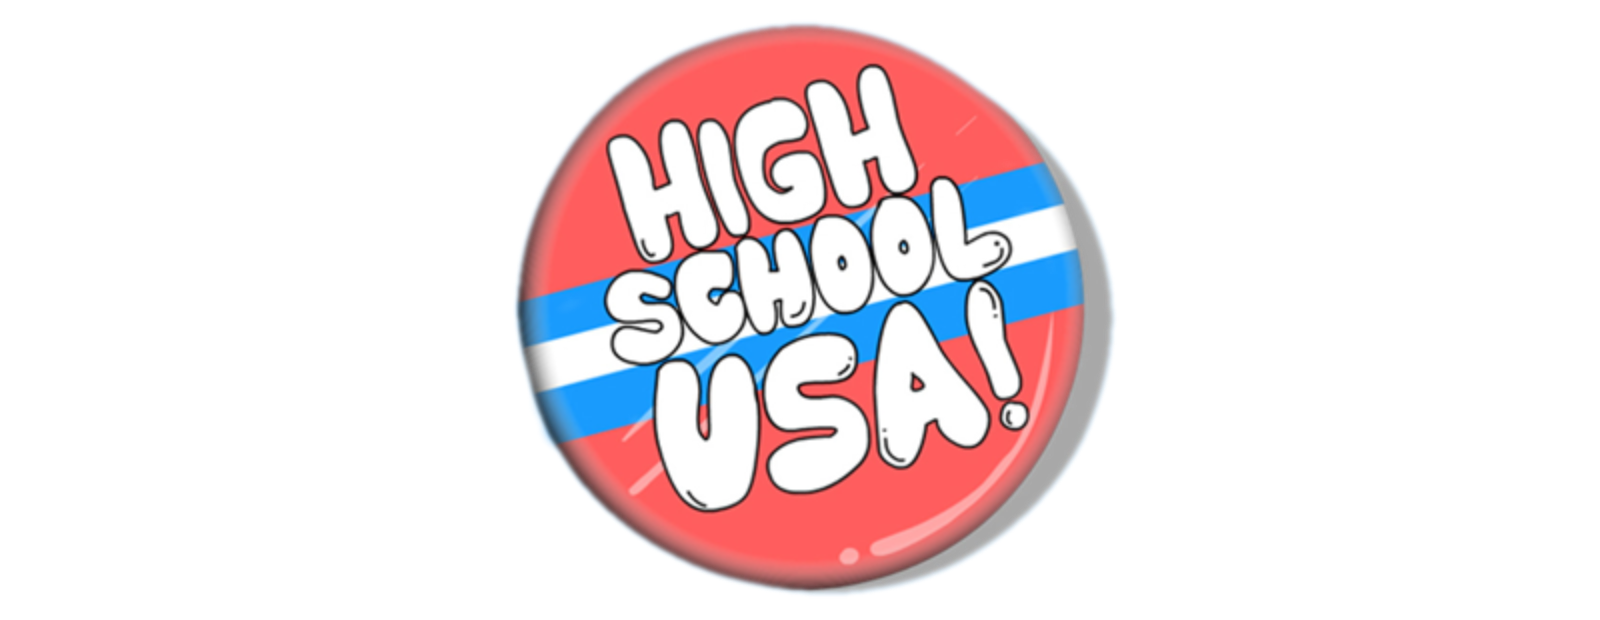 High School USA! (1 DVD Box Set)